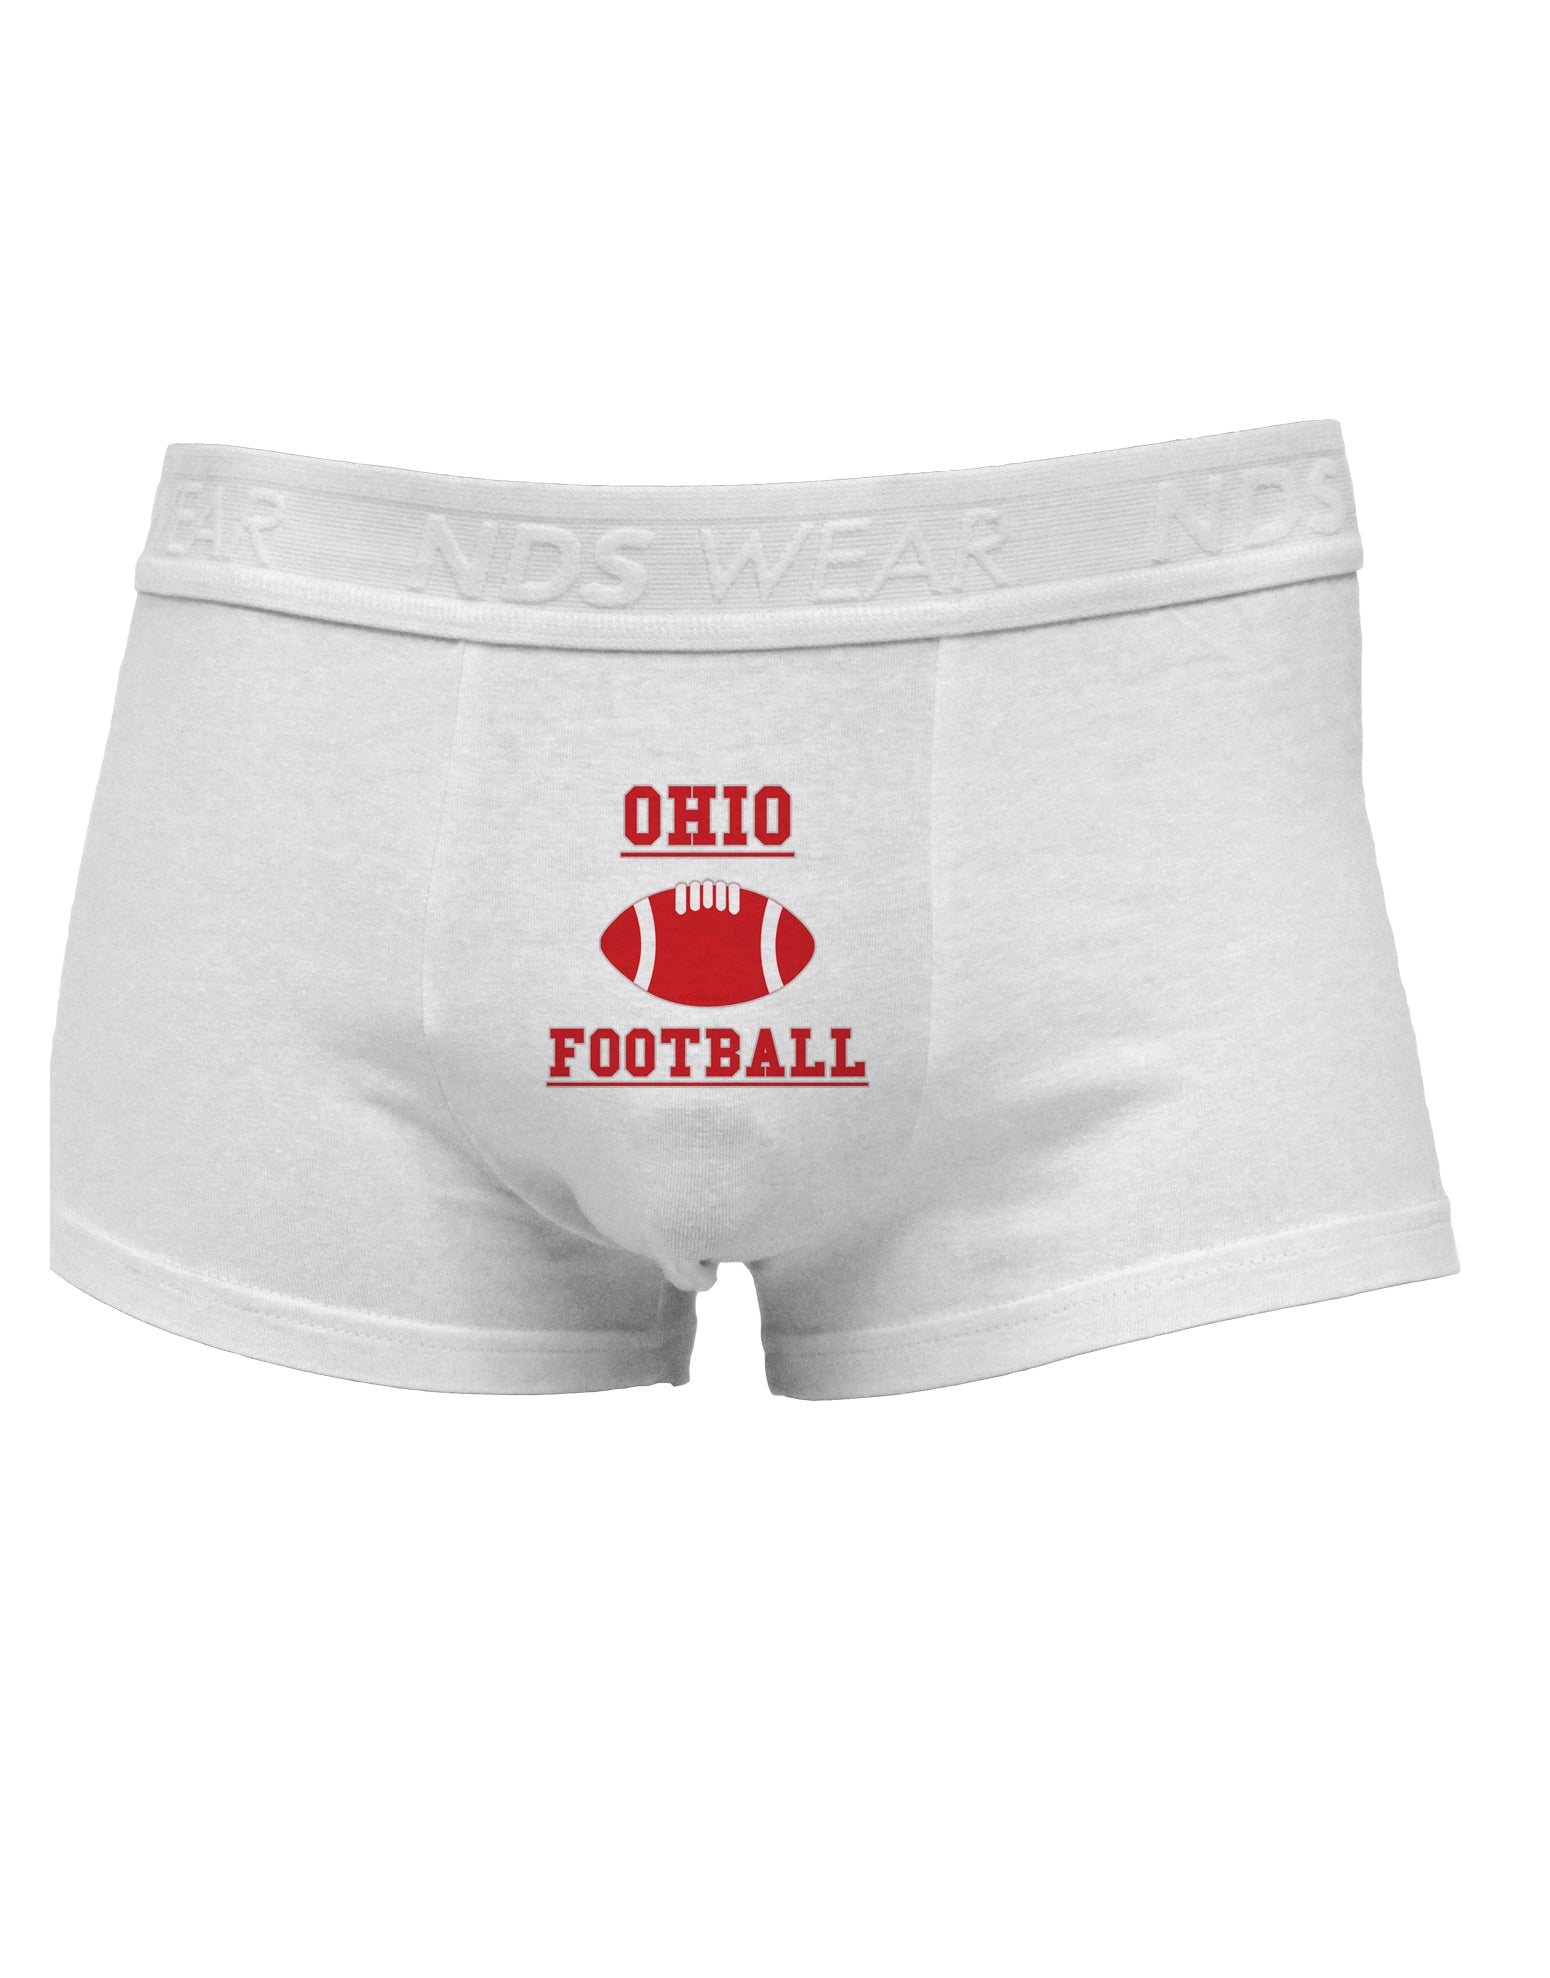 Football Underwear